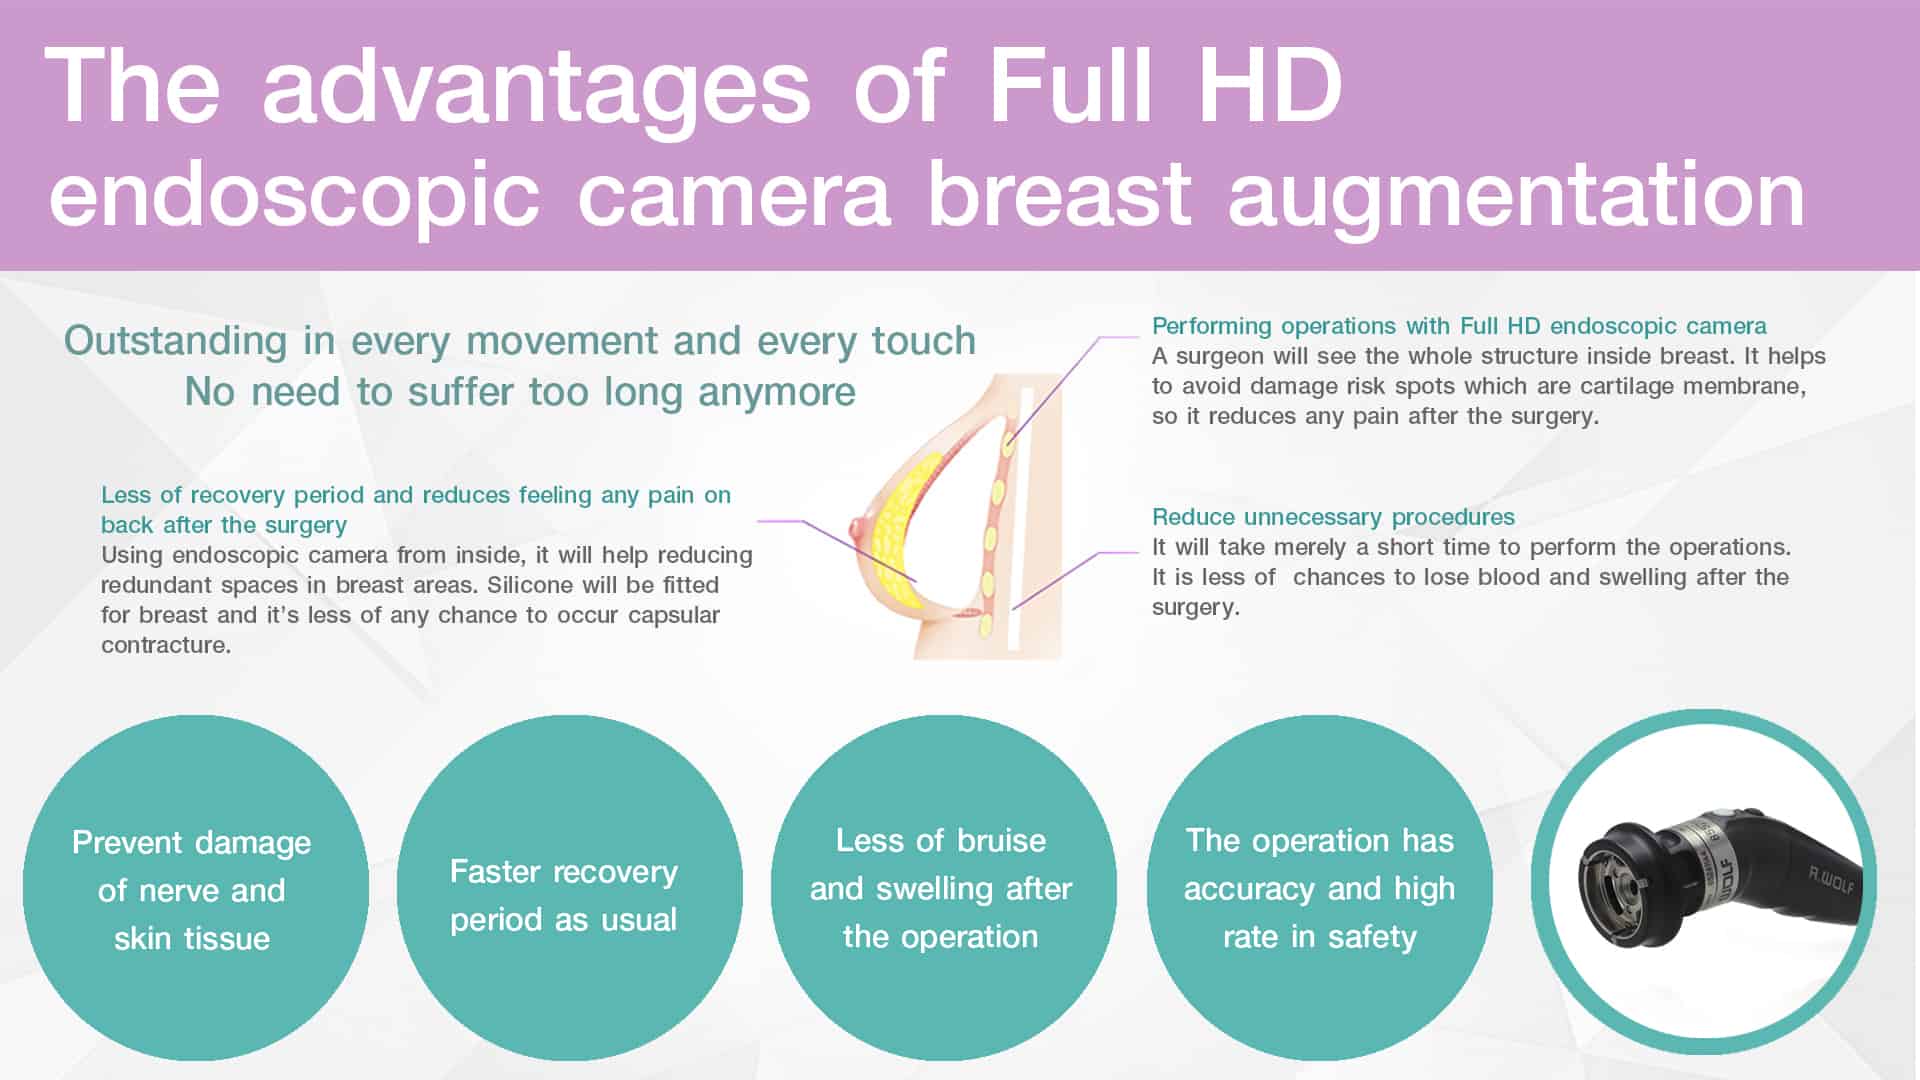 Breast Augmentation with Full HD endoscopic camera